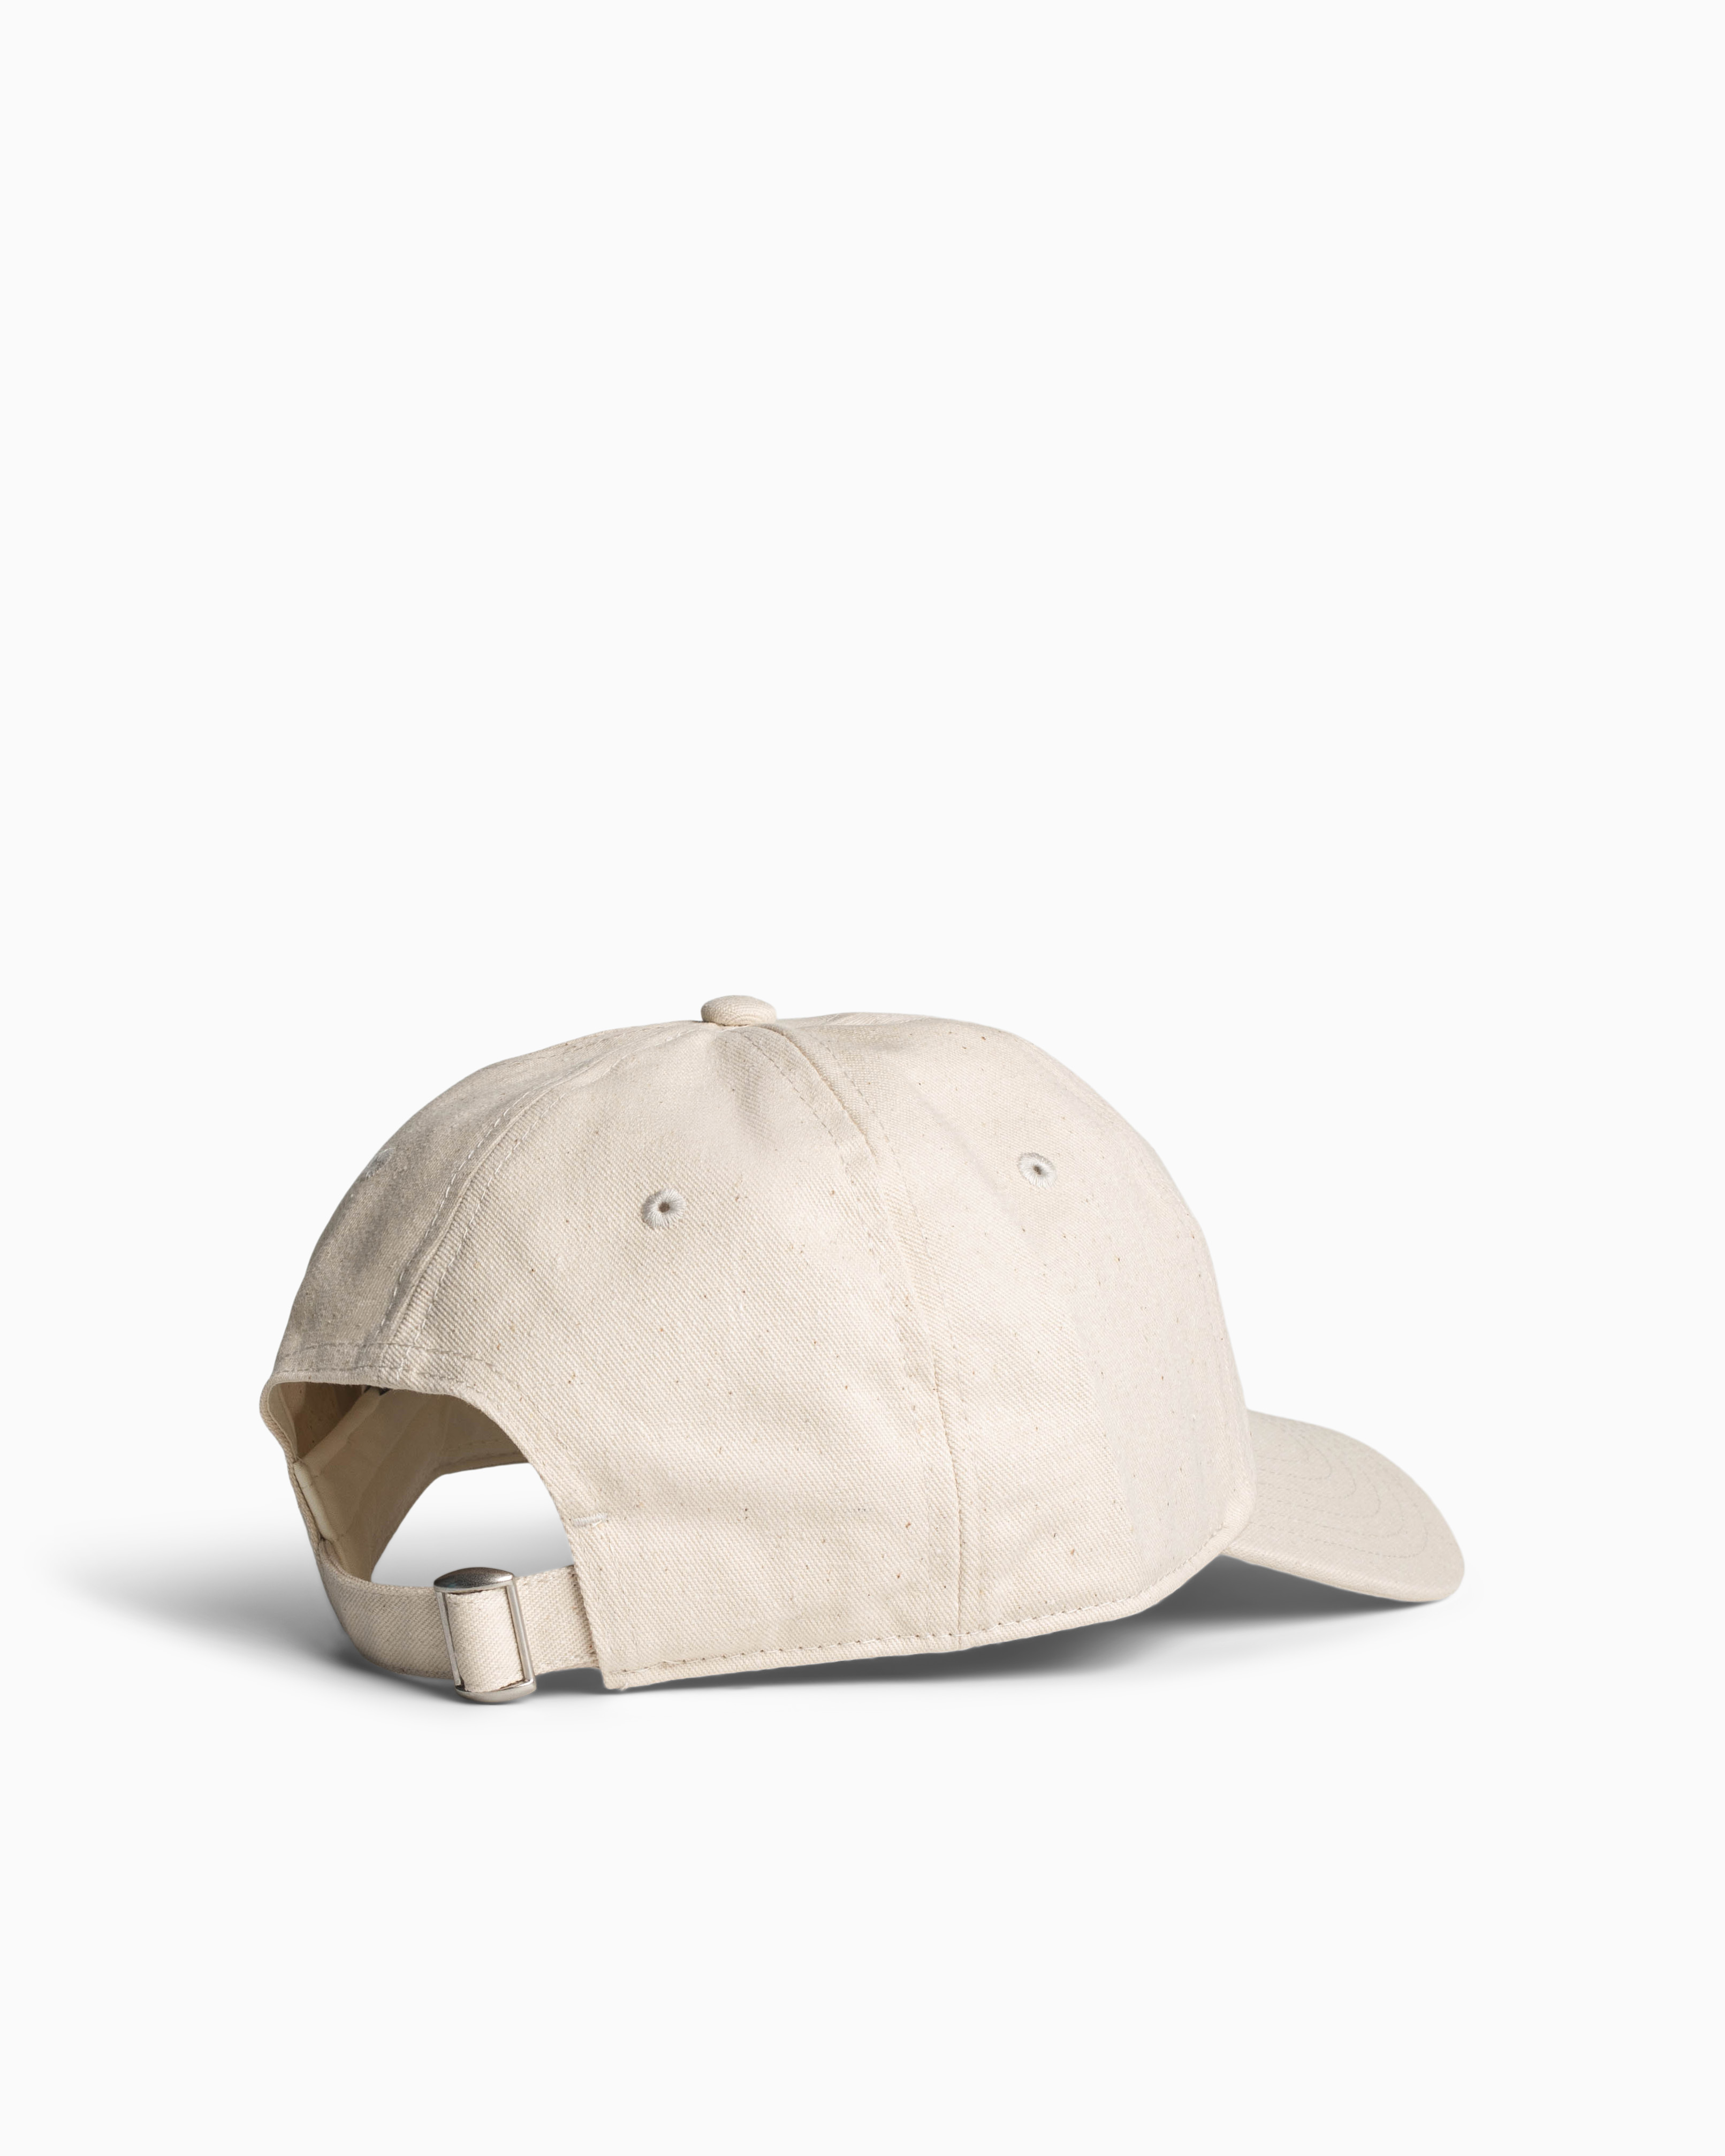 TNF x Online Ceramics Ballcap The North Face Headwear Caps White